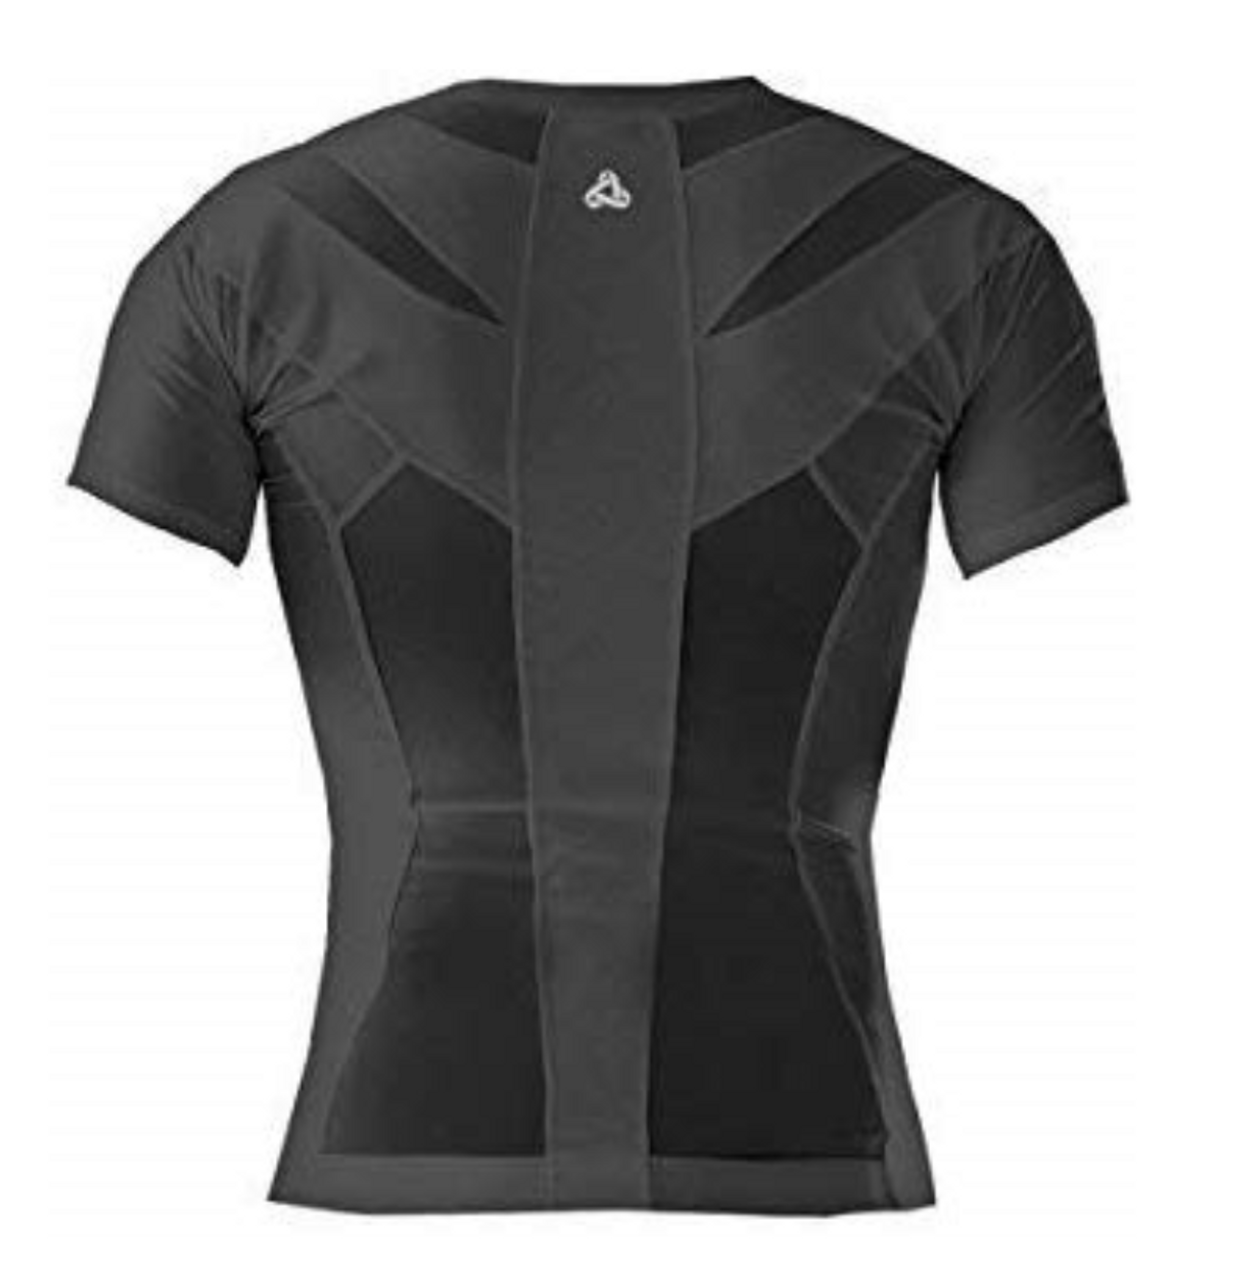 AlignMed Posture Shirt 2.0 - Pullover - MedEquip Depot